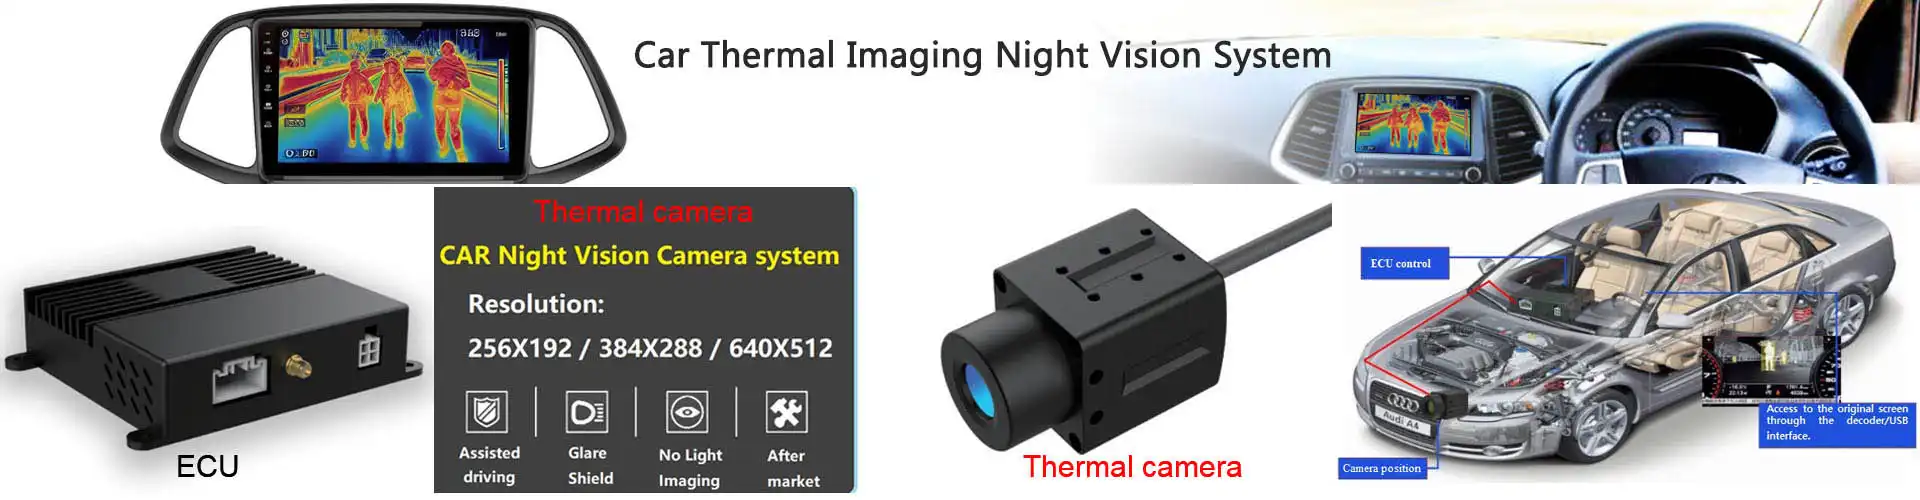 Thermal Camera: iSun Digitech Limited